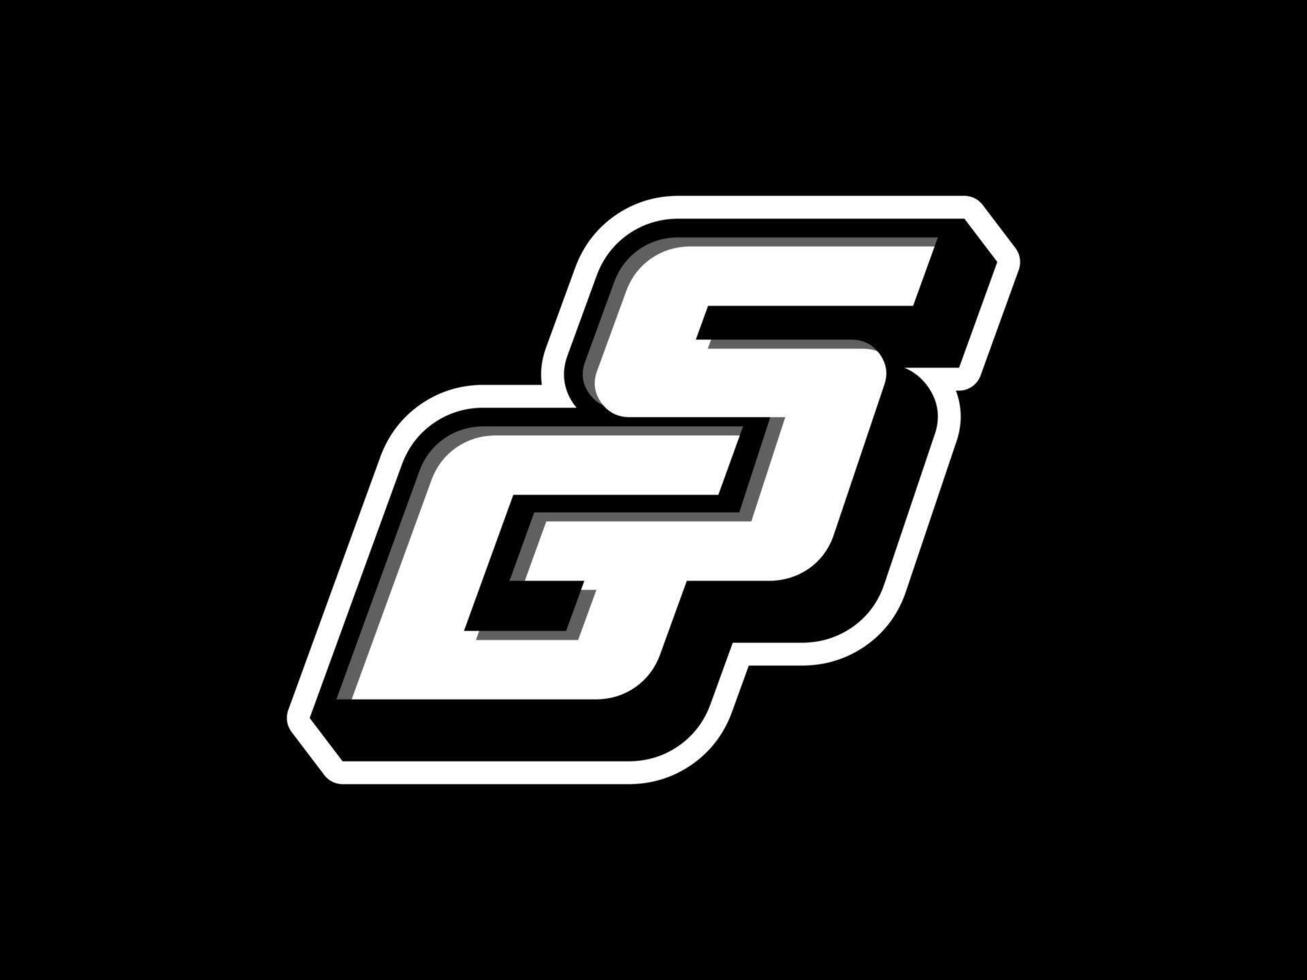 Initial letter S and G, SG, GS, overlapping interlock logo, monogram line art style, grey white on black background vector